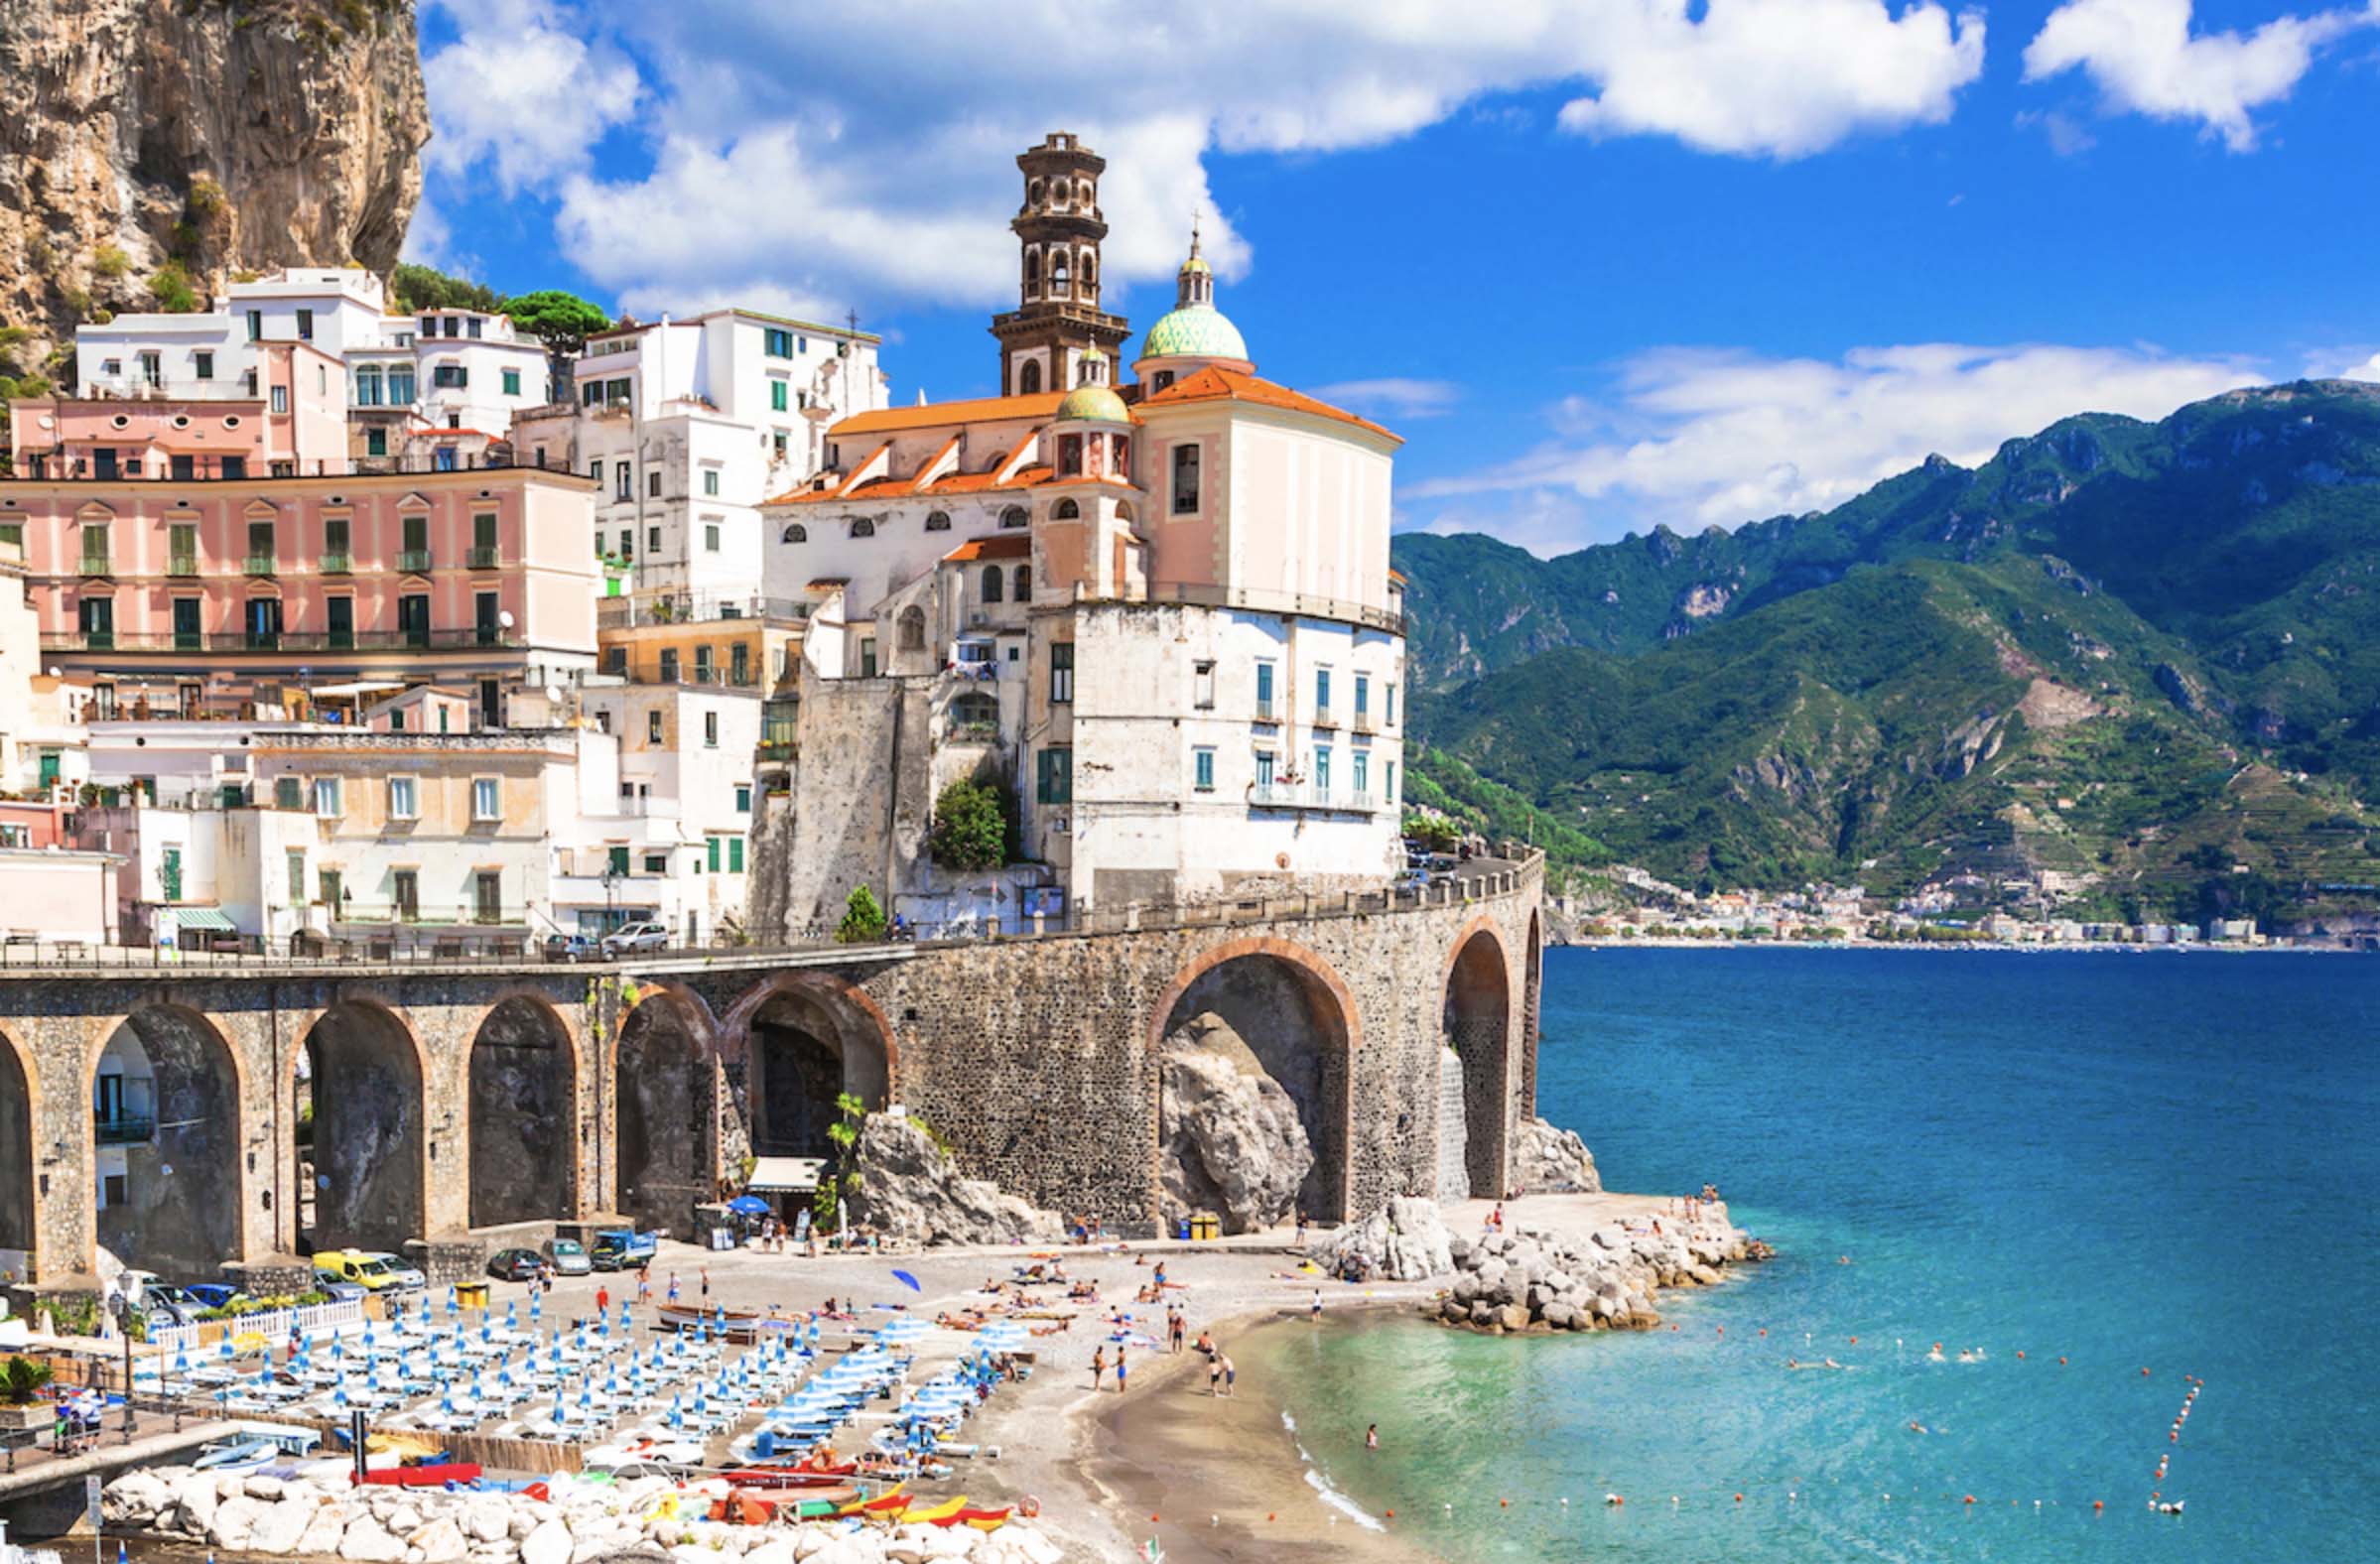 Atrani village in Amalfi coast of Italy